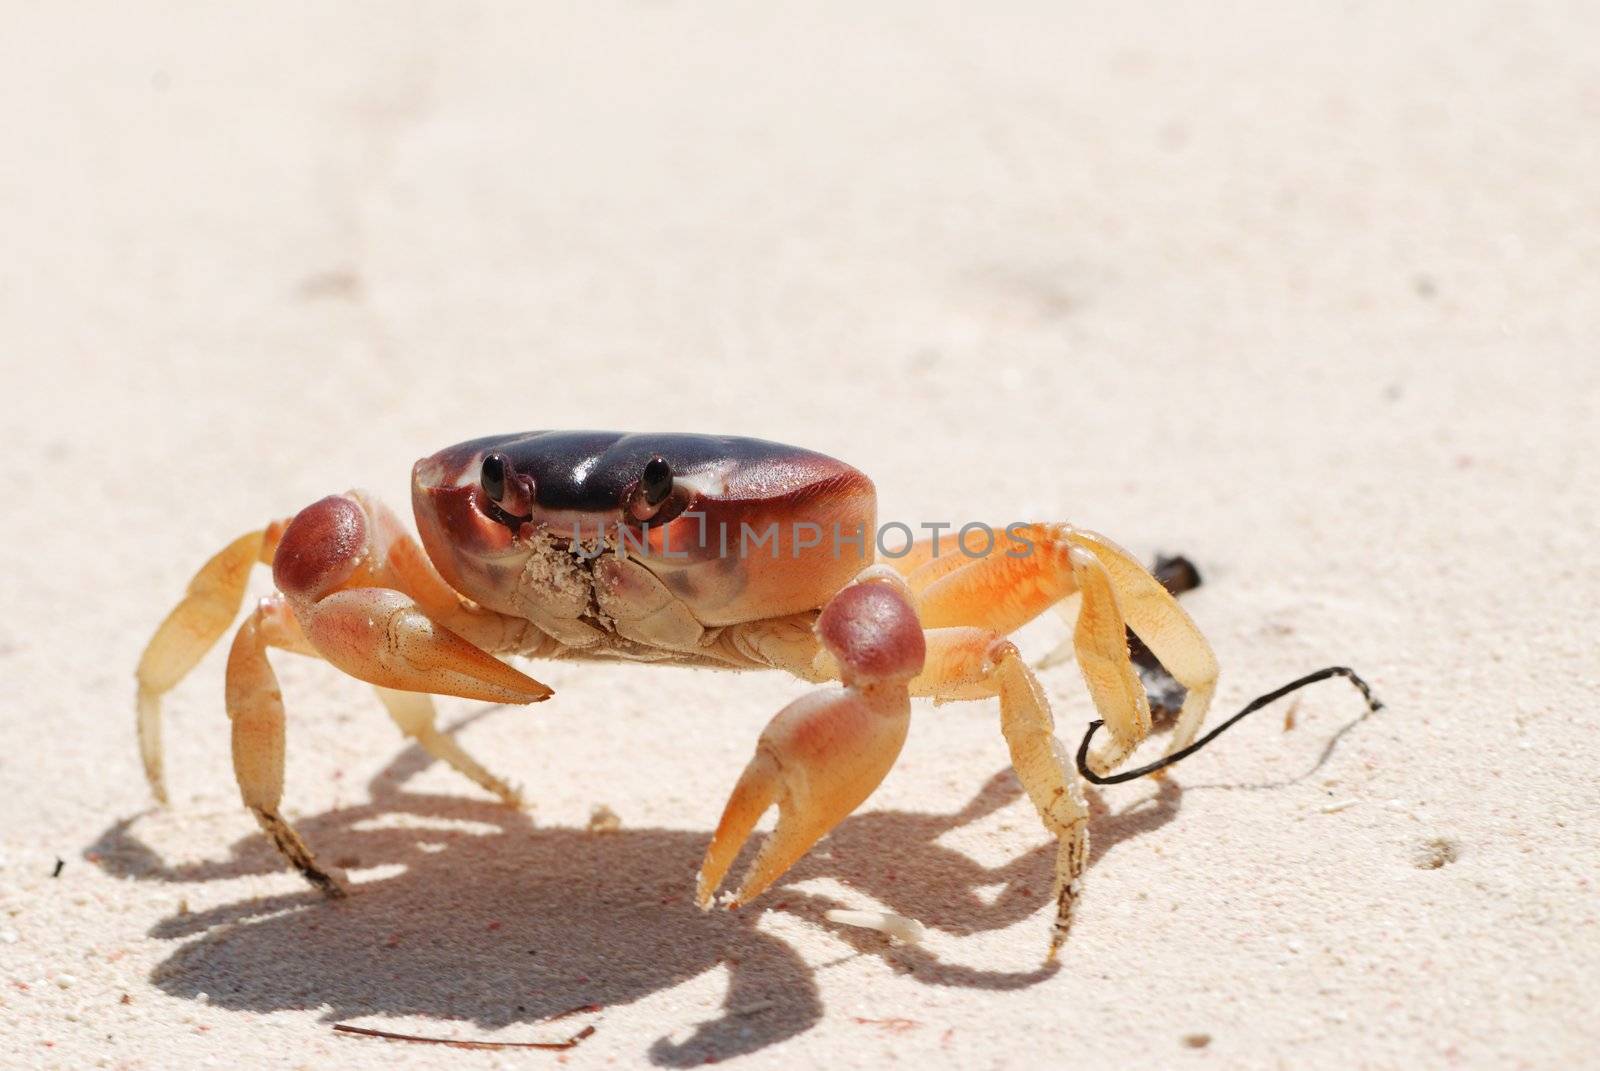 Crab on a caribbean beach in Dominican Republic